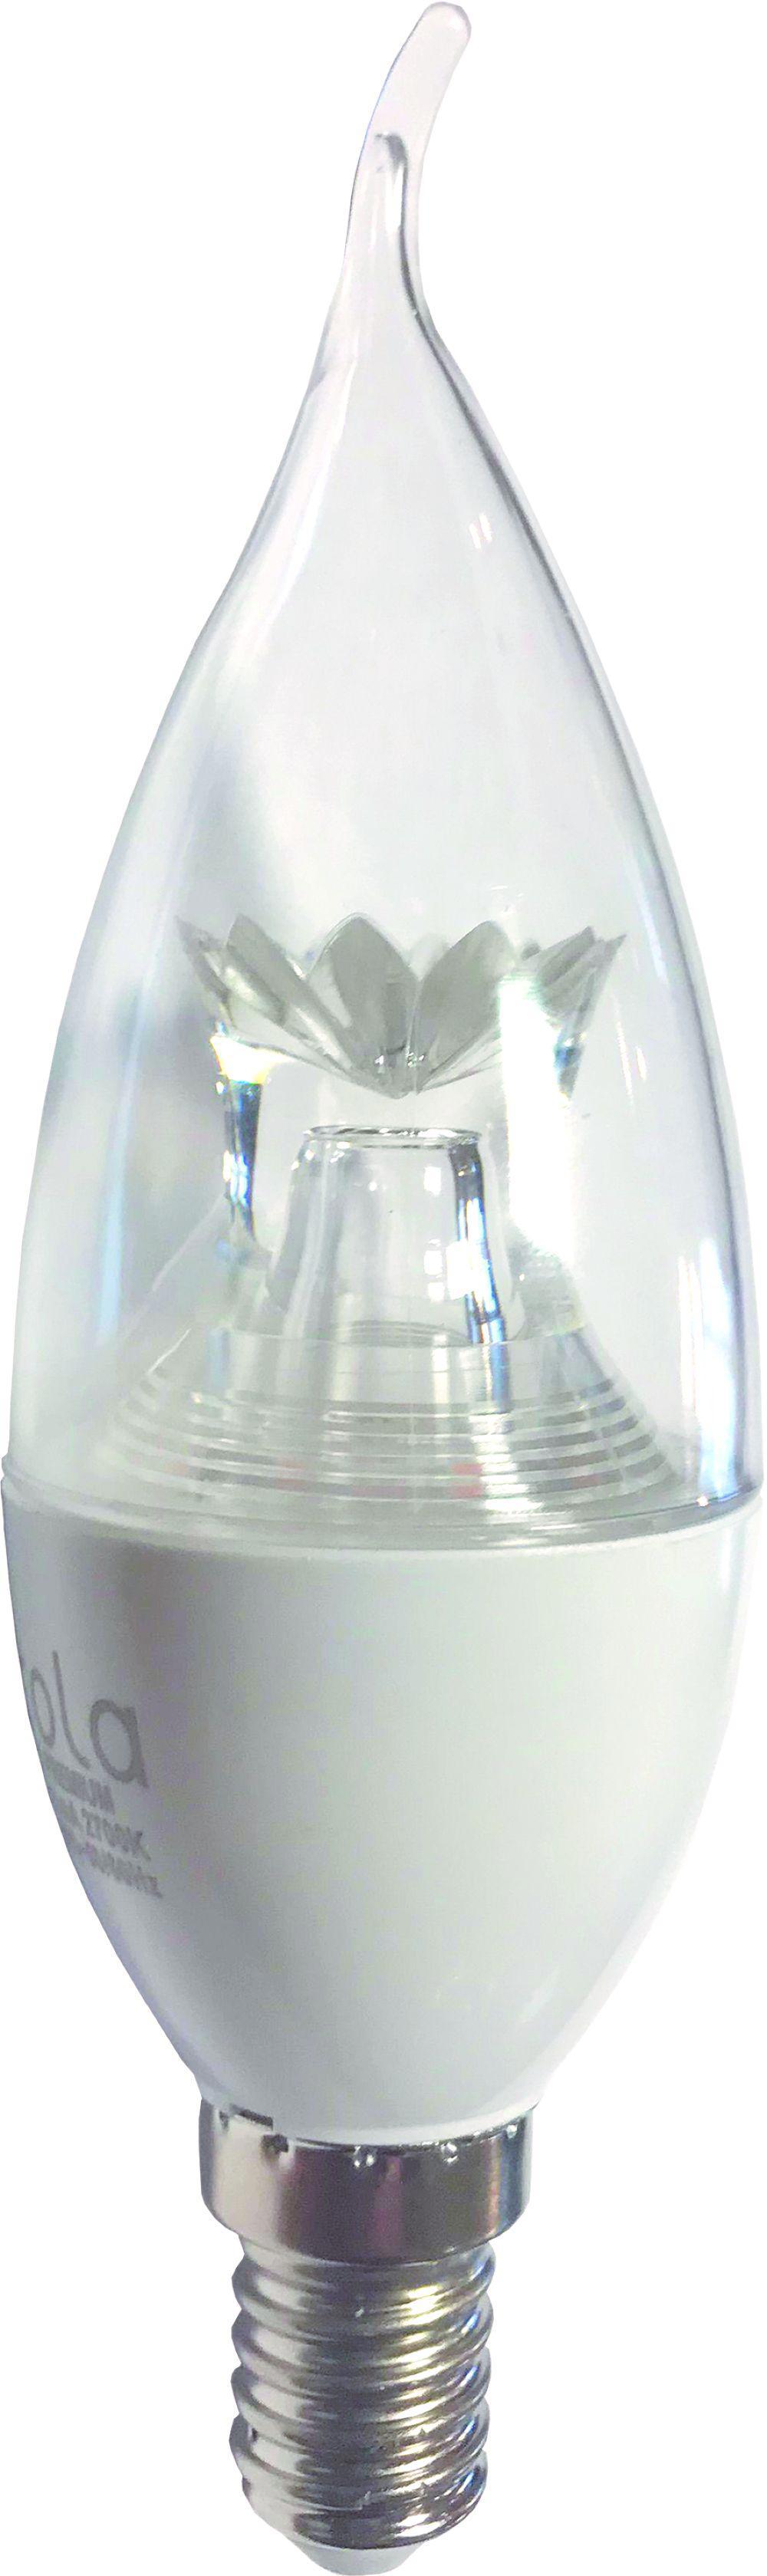 90121038 Лампа Premium светодионая E14 8 Вт свеча на ветру 720 Лм теплый свет STLM-0112274 ECOLA